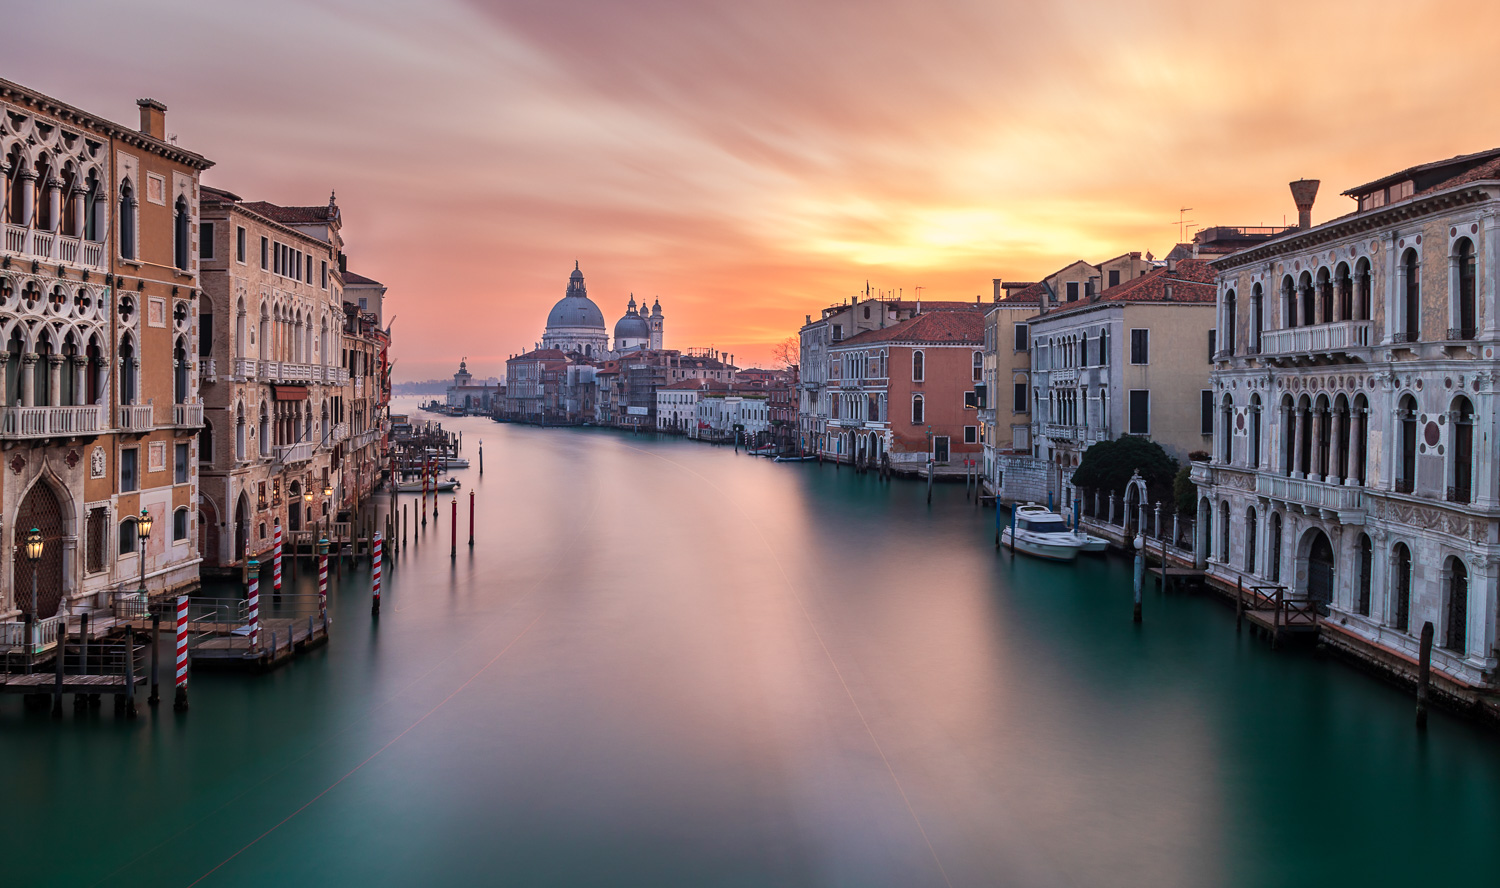 Sunrise over grand canal in Venice